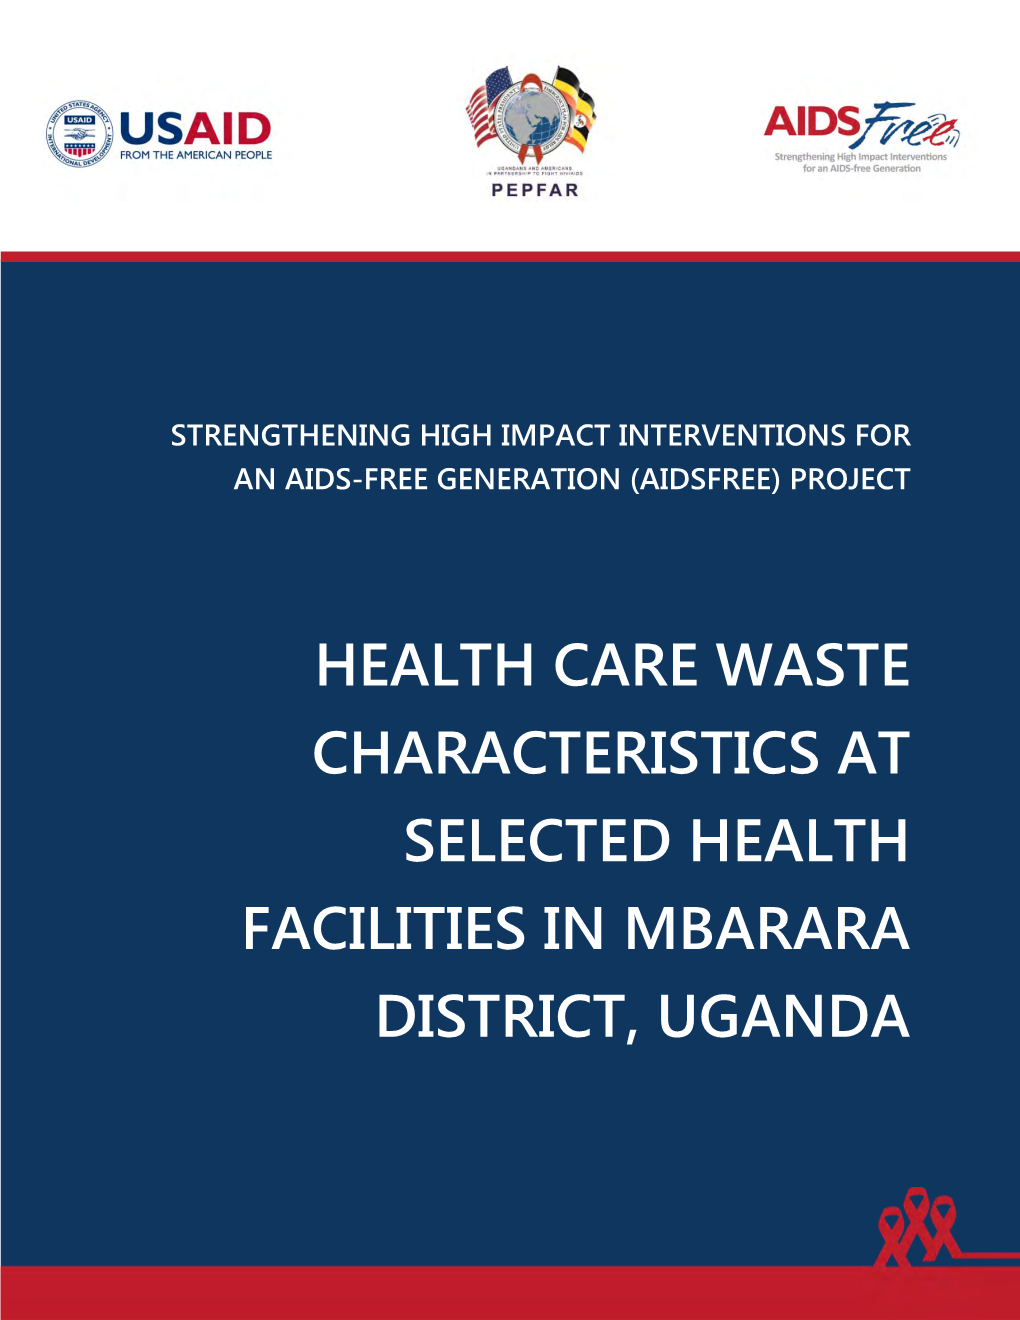 Health Care Waste Characteristics at Selected Health Facilities in Mbarara District, Uganda